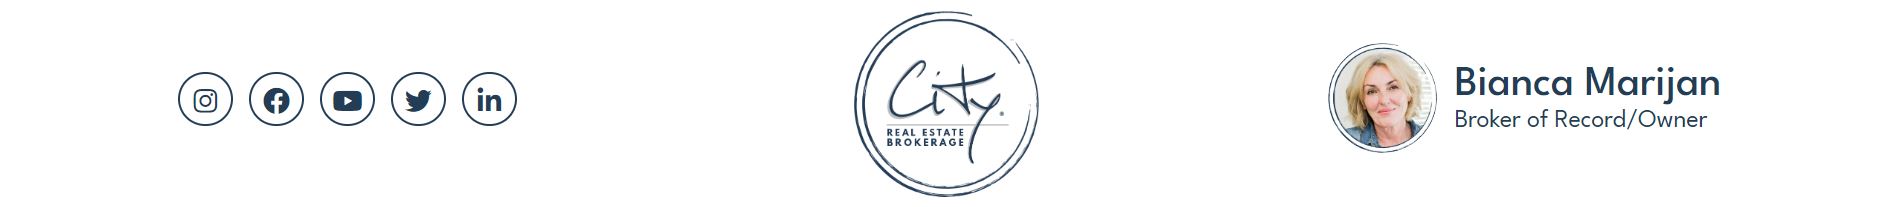 Best Hamilton Real Estate - Home